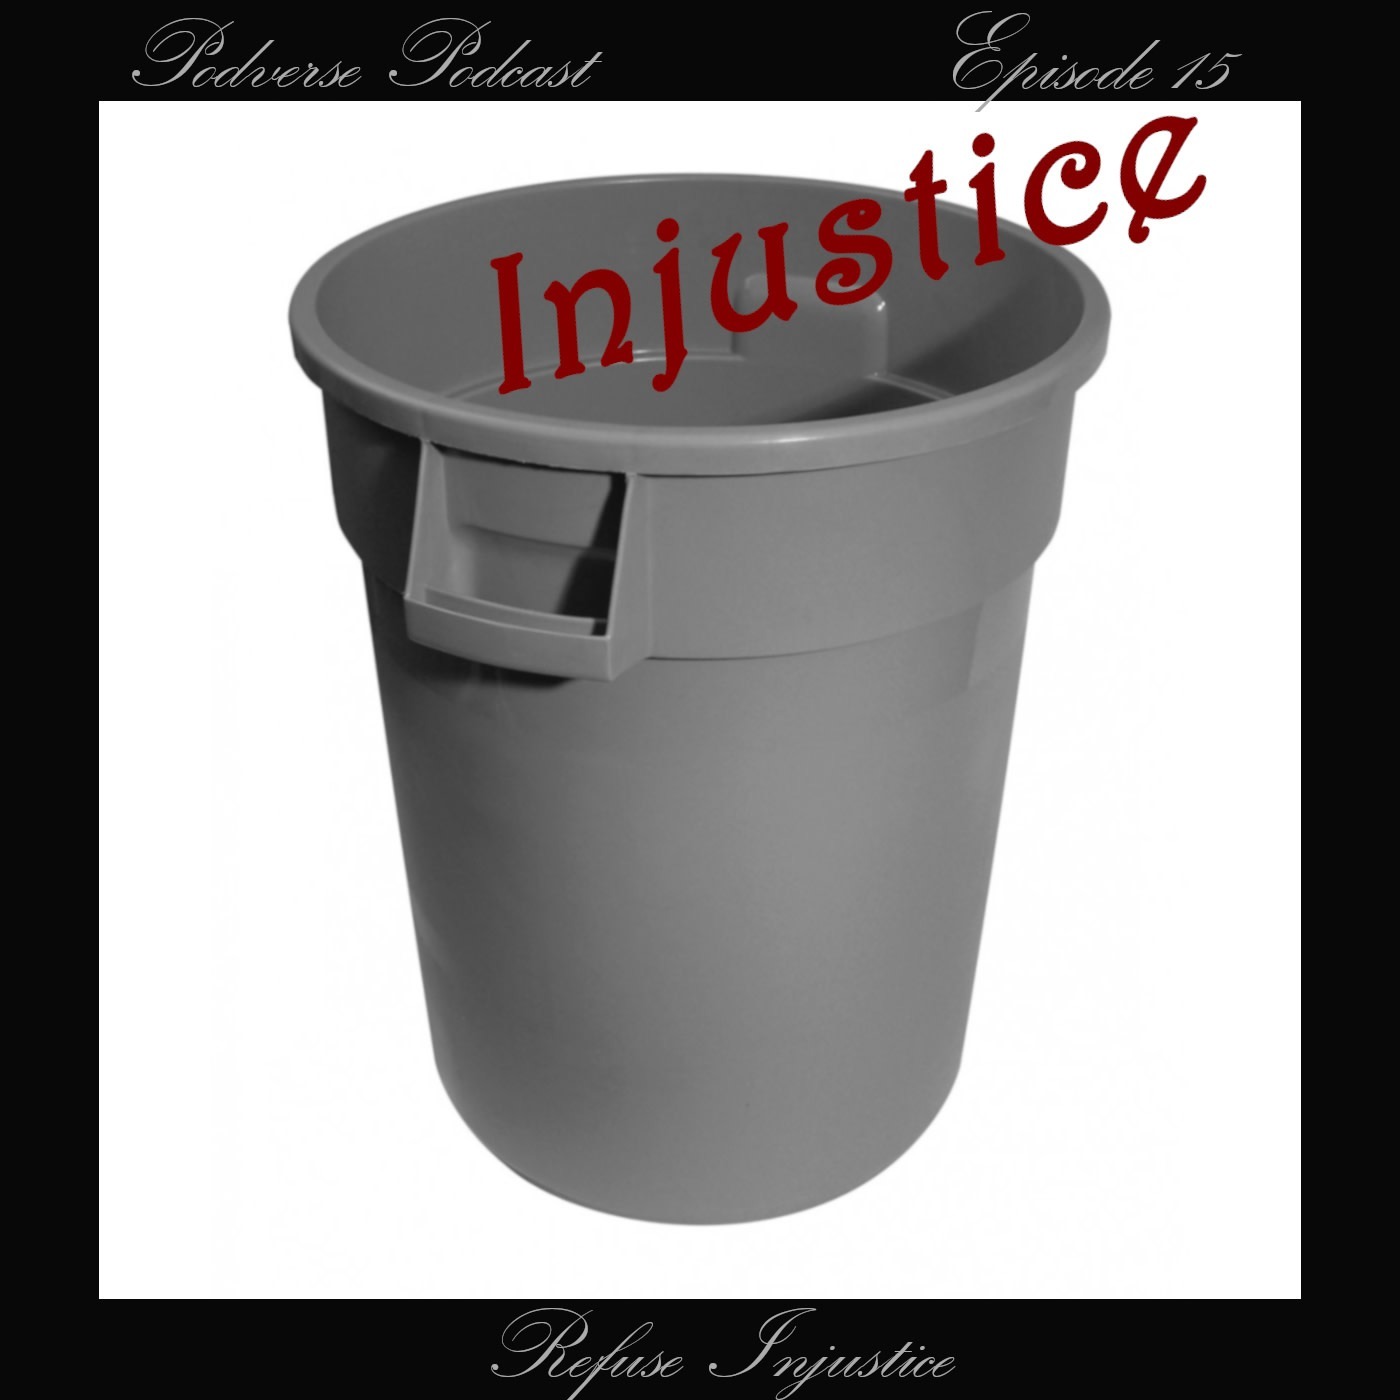 Refuse injustice.  - Episode 15